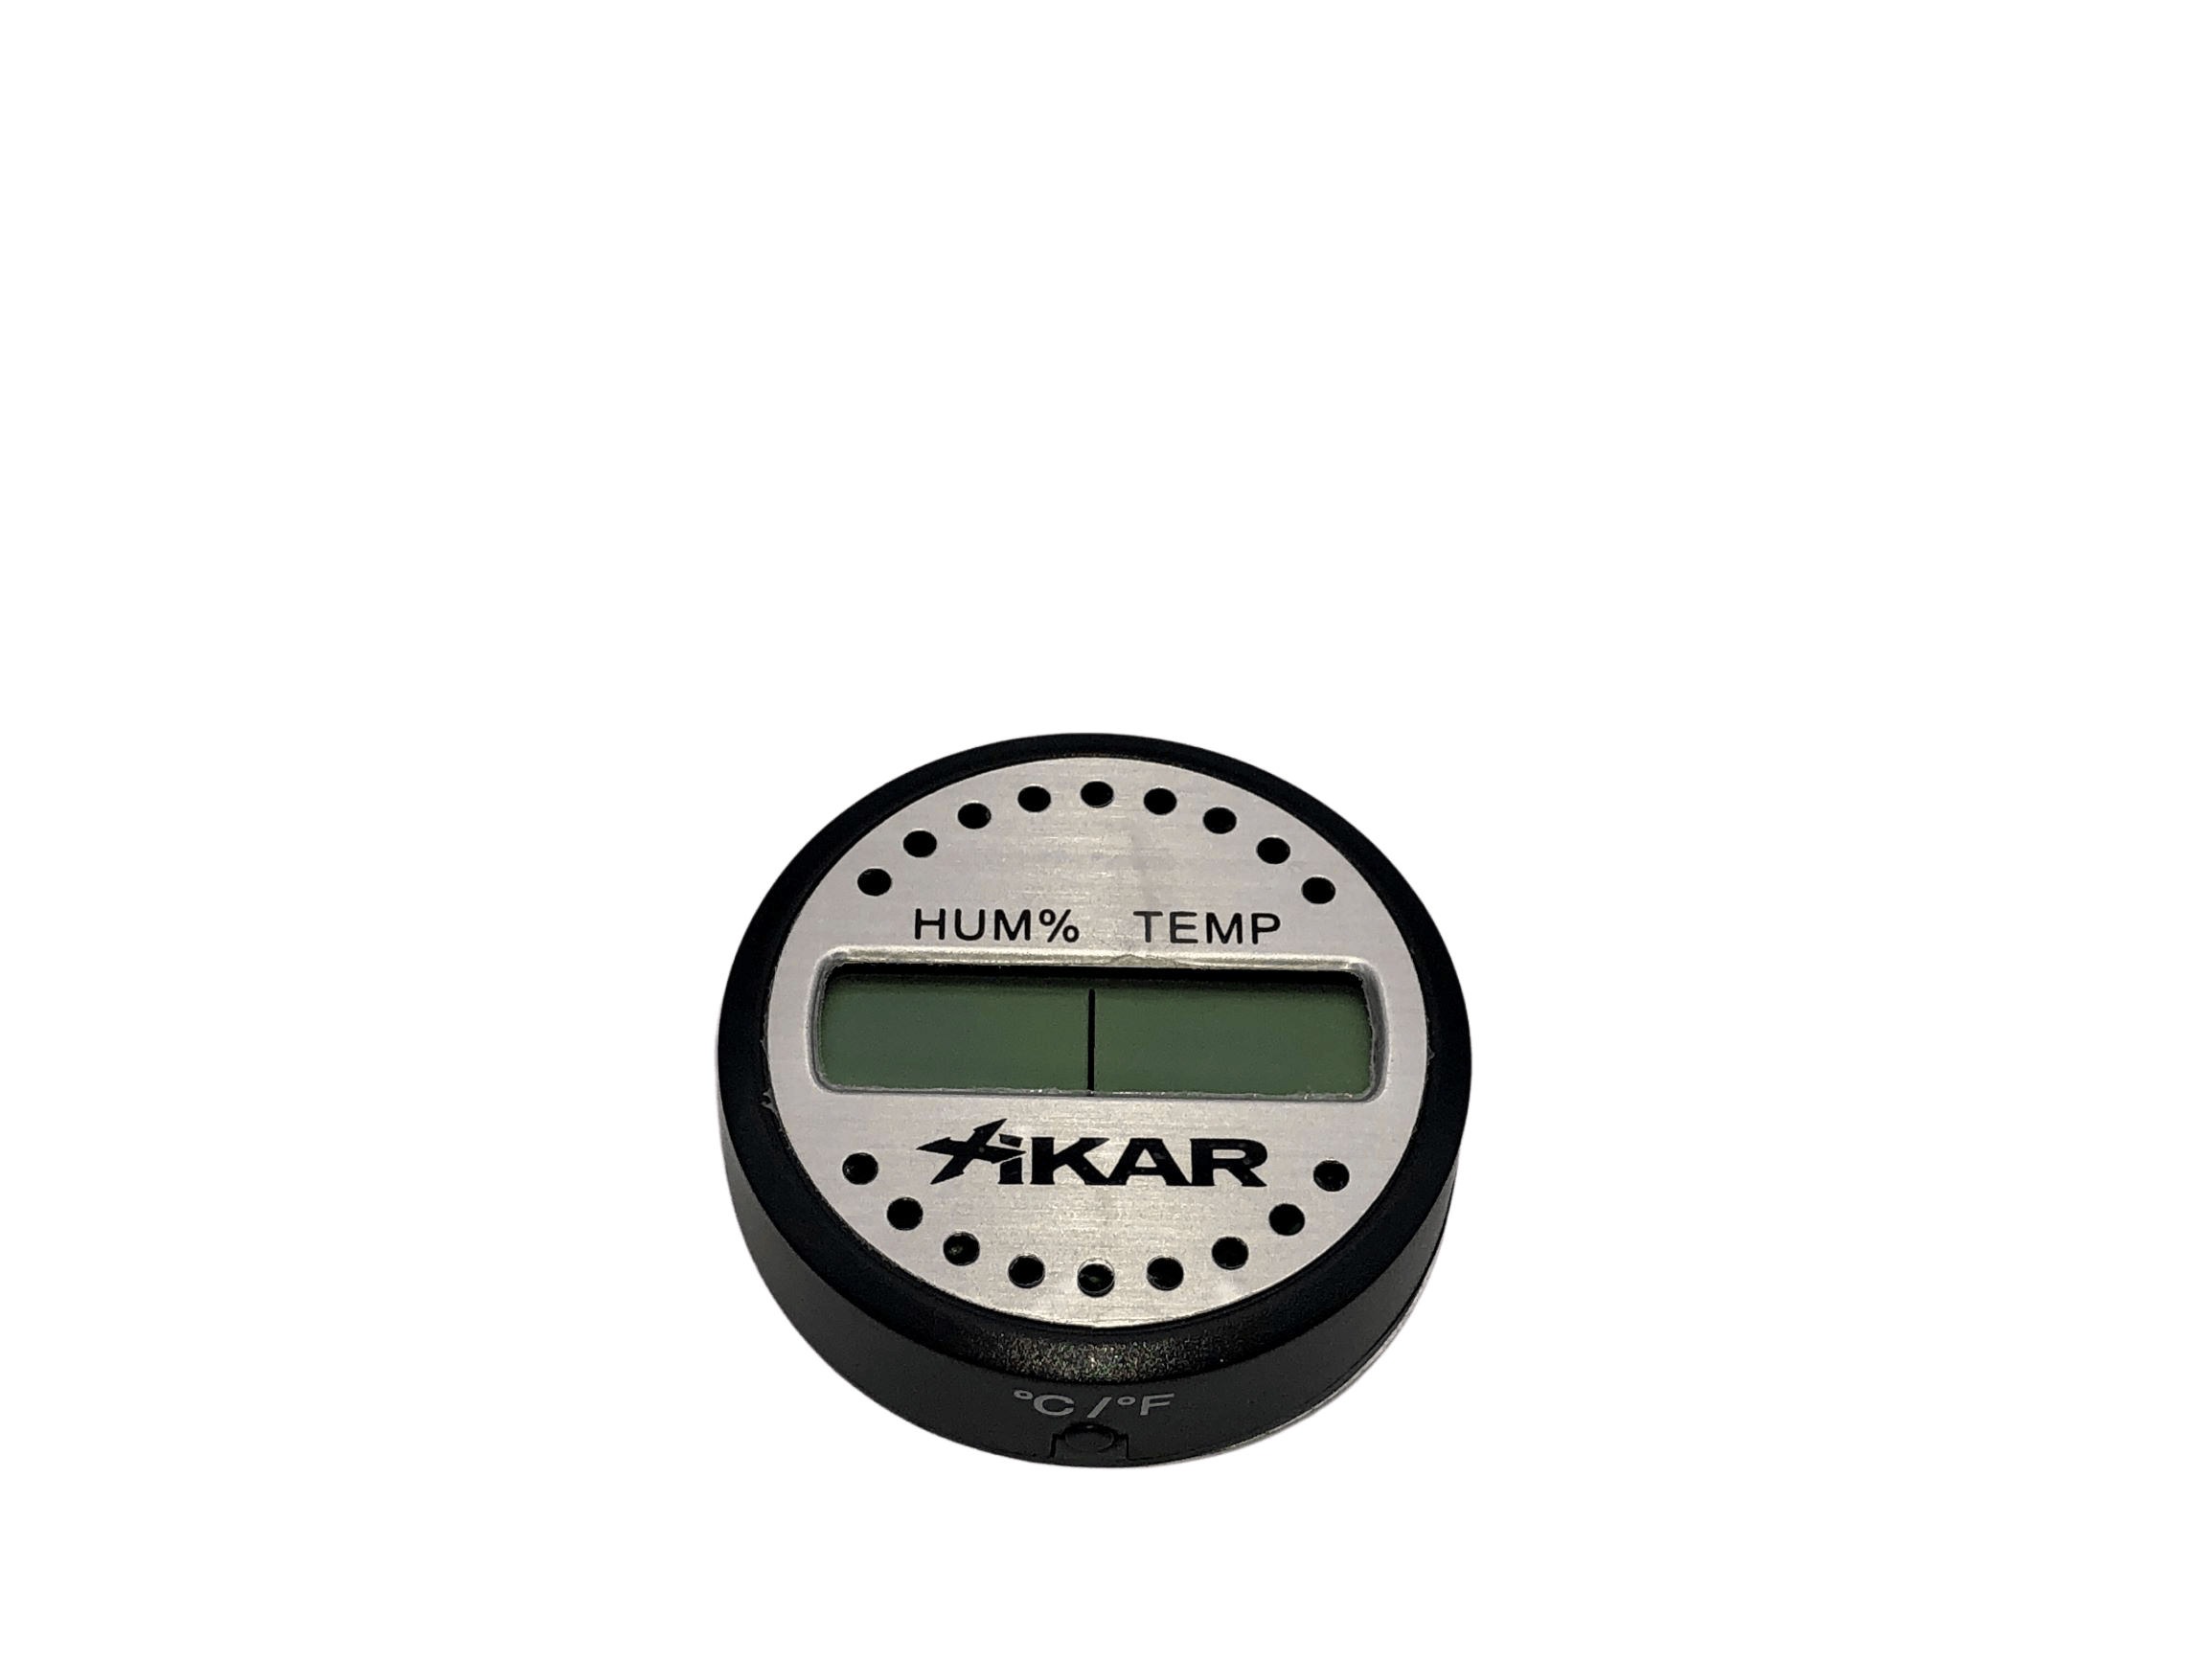 Round Digital Hygrometer